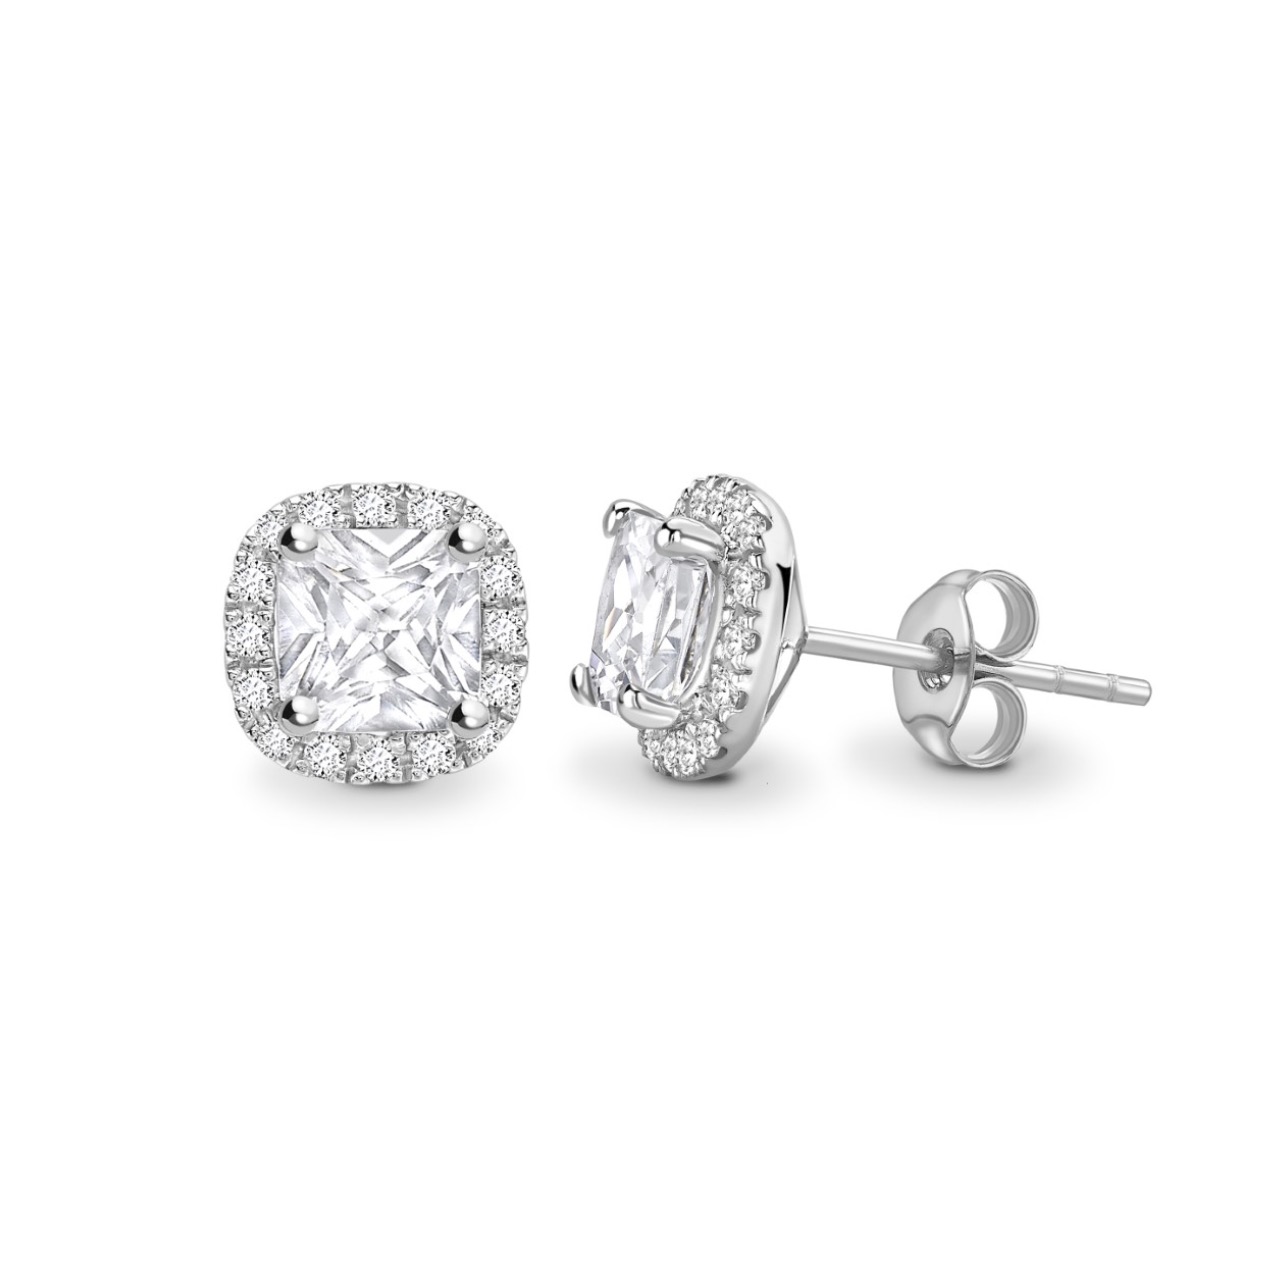 Anastasia-earrings